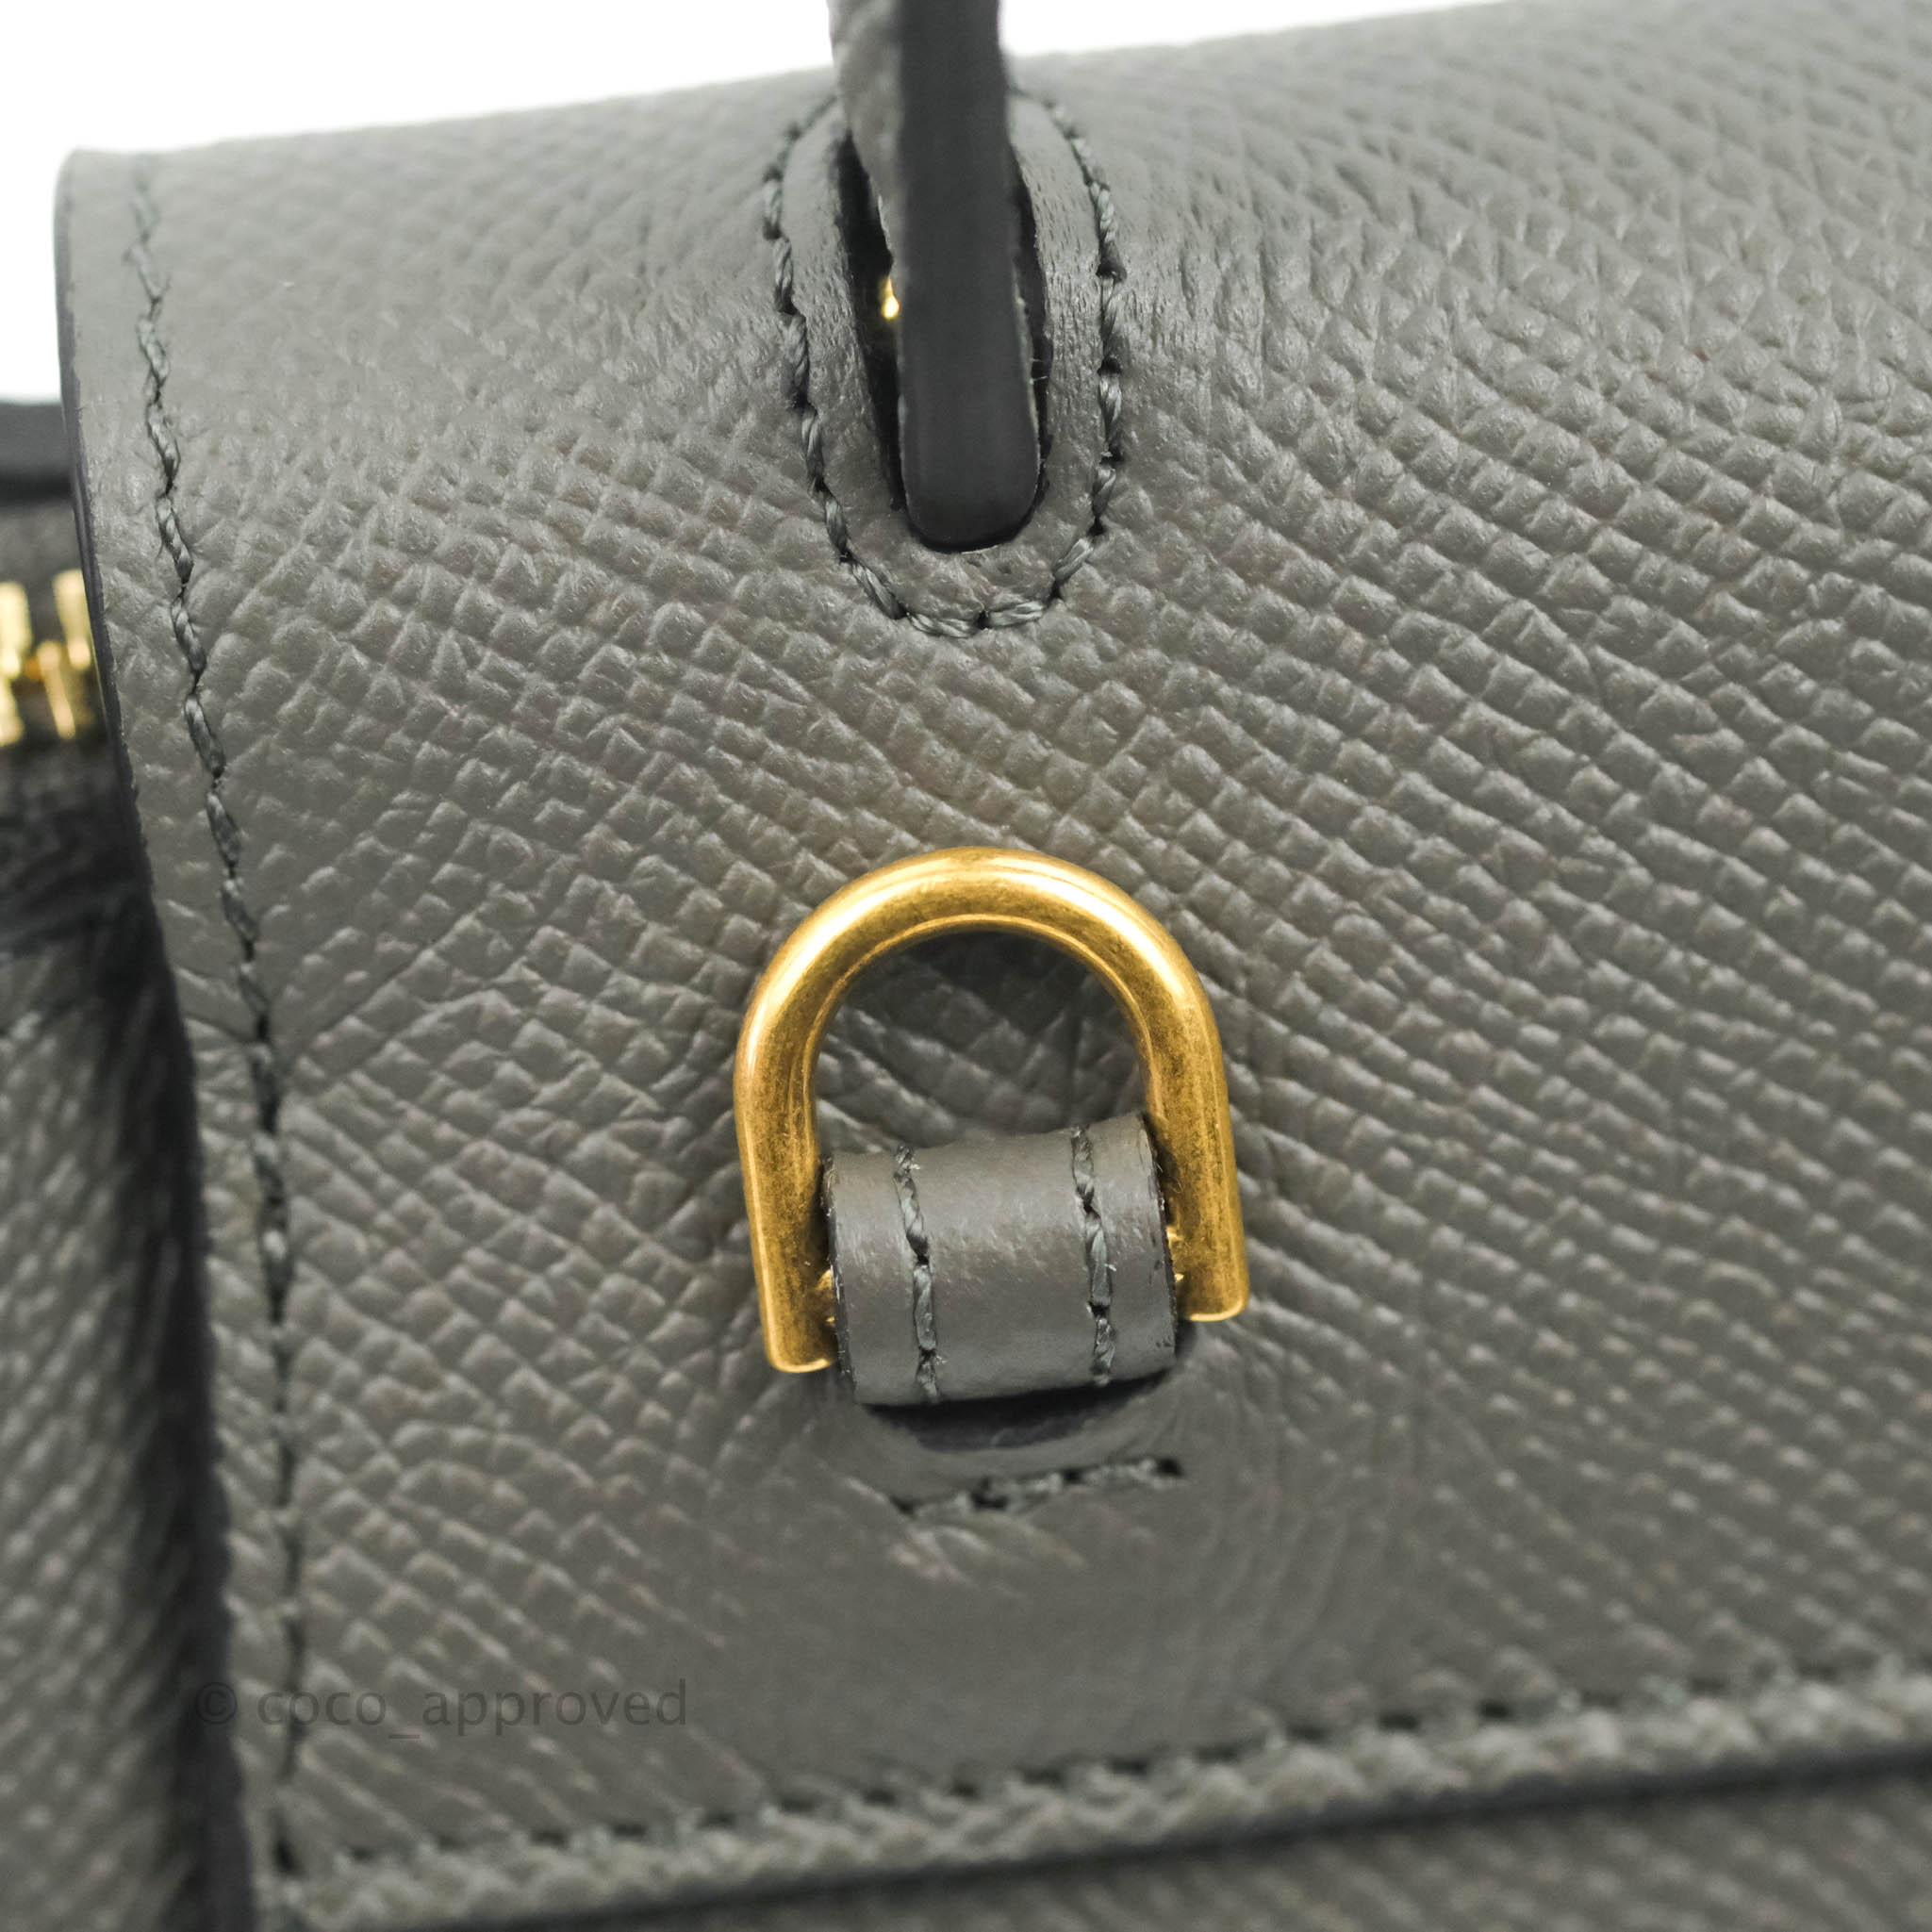 Celine Pico Belt Bag : r/handbags